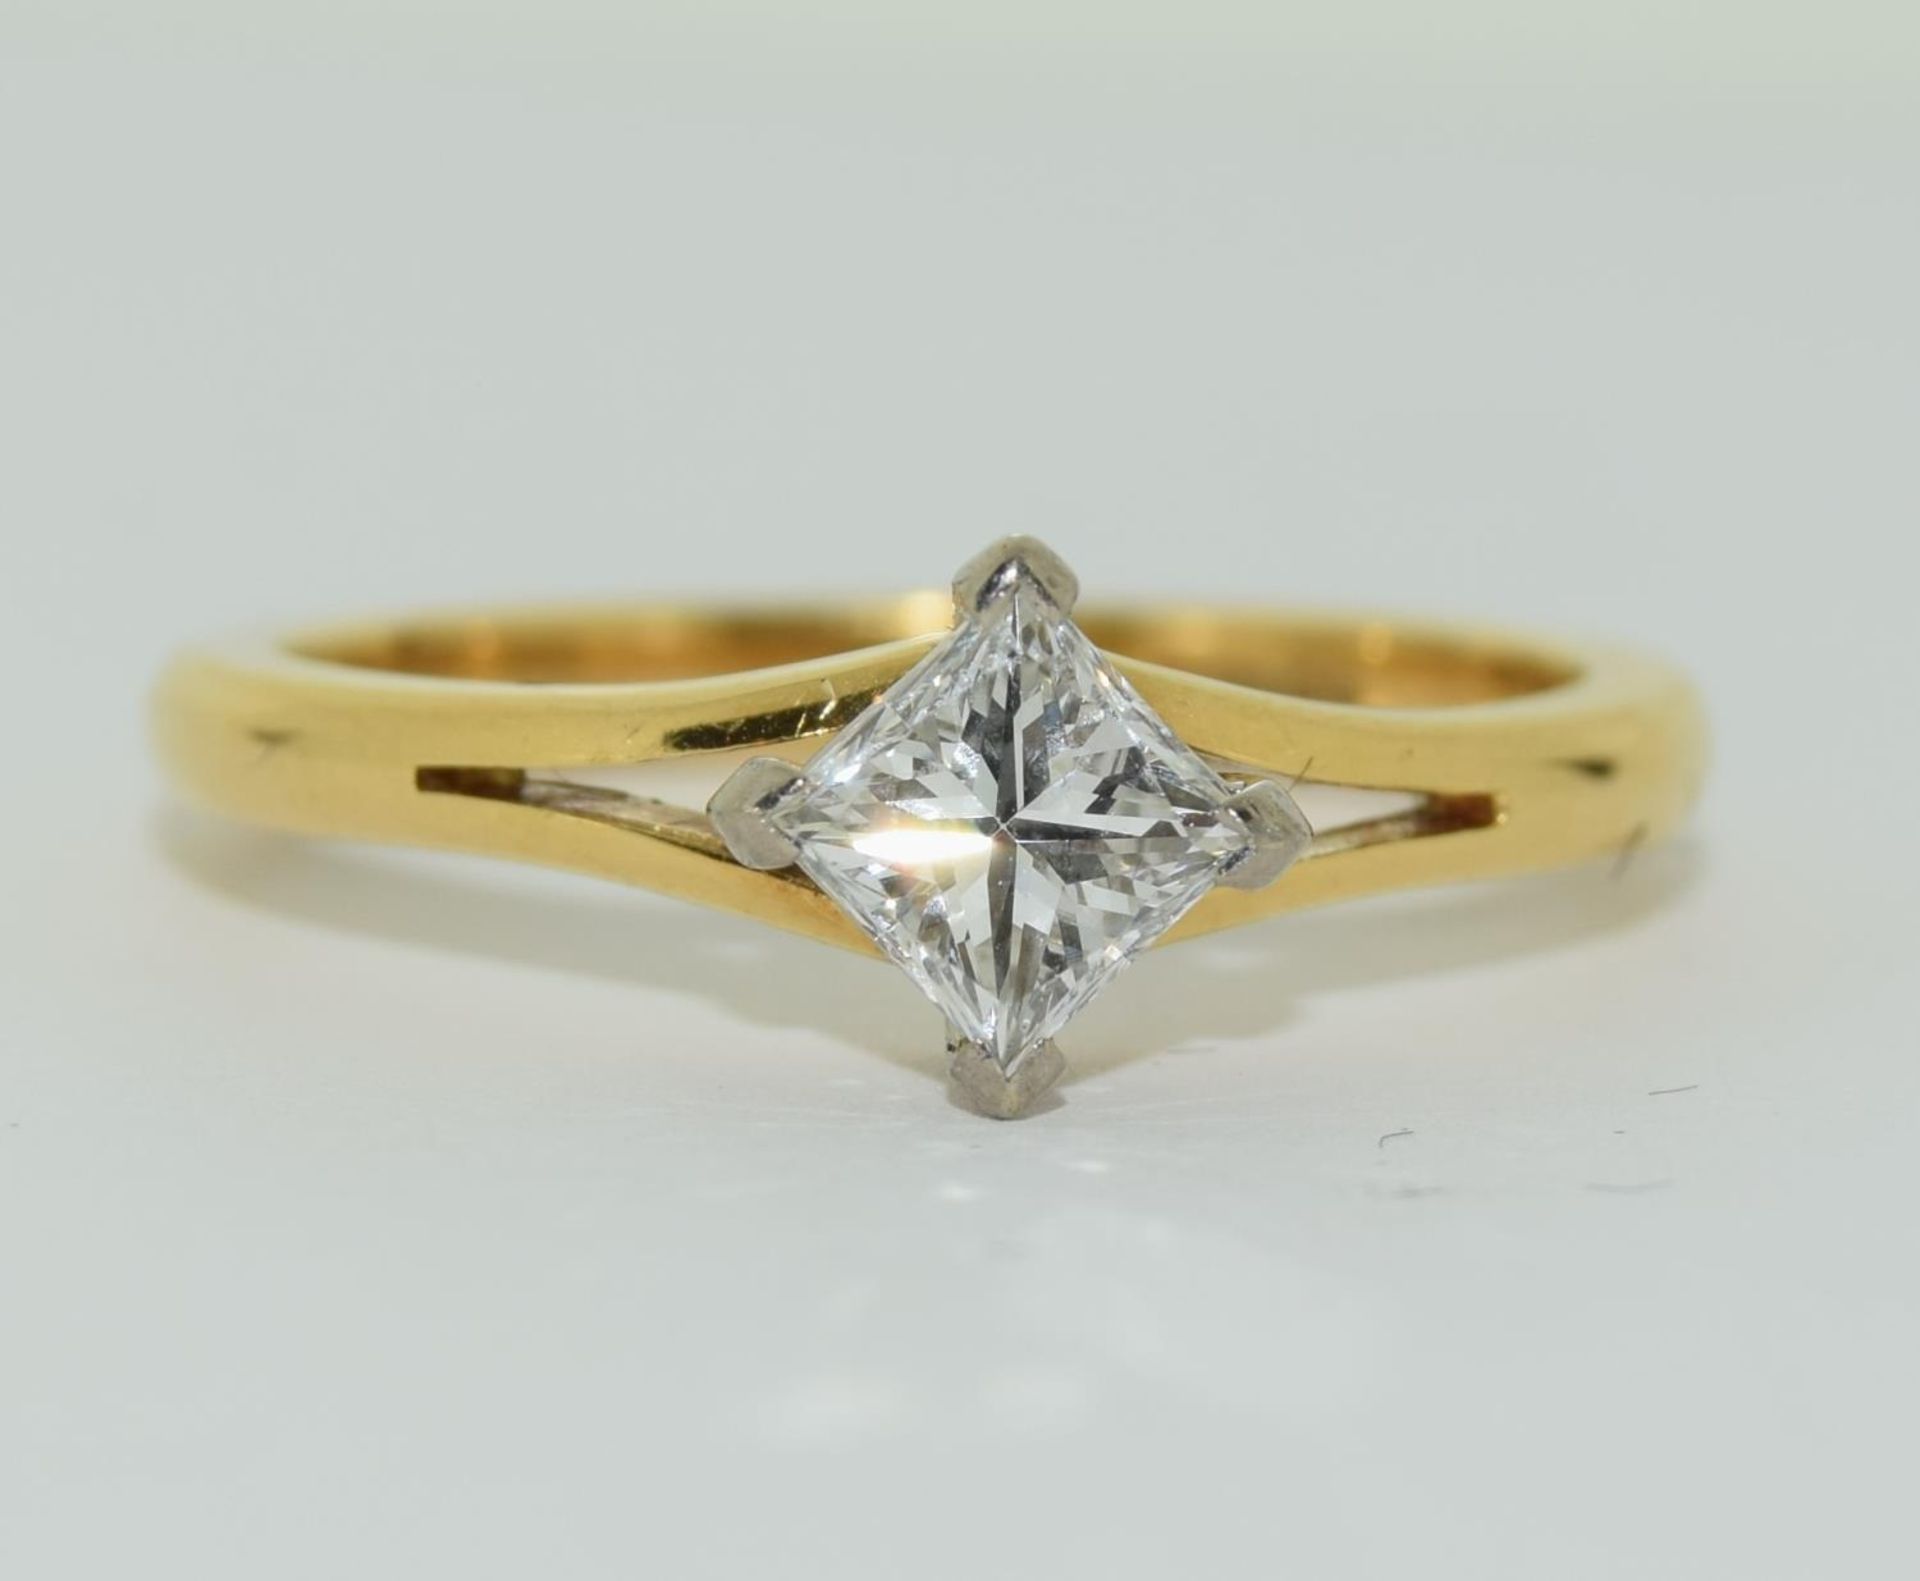 An 18ct yellow gold diamond (solitaire) approx weight - 3.1gm, diamond cut-princess diamond